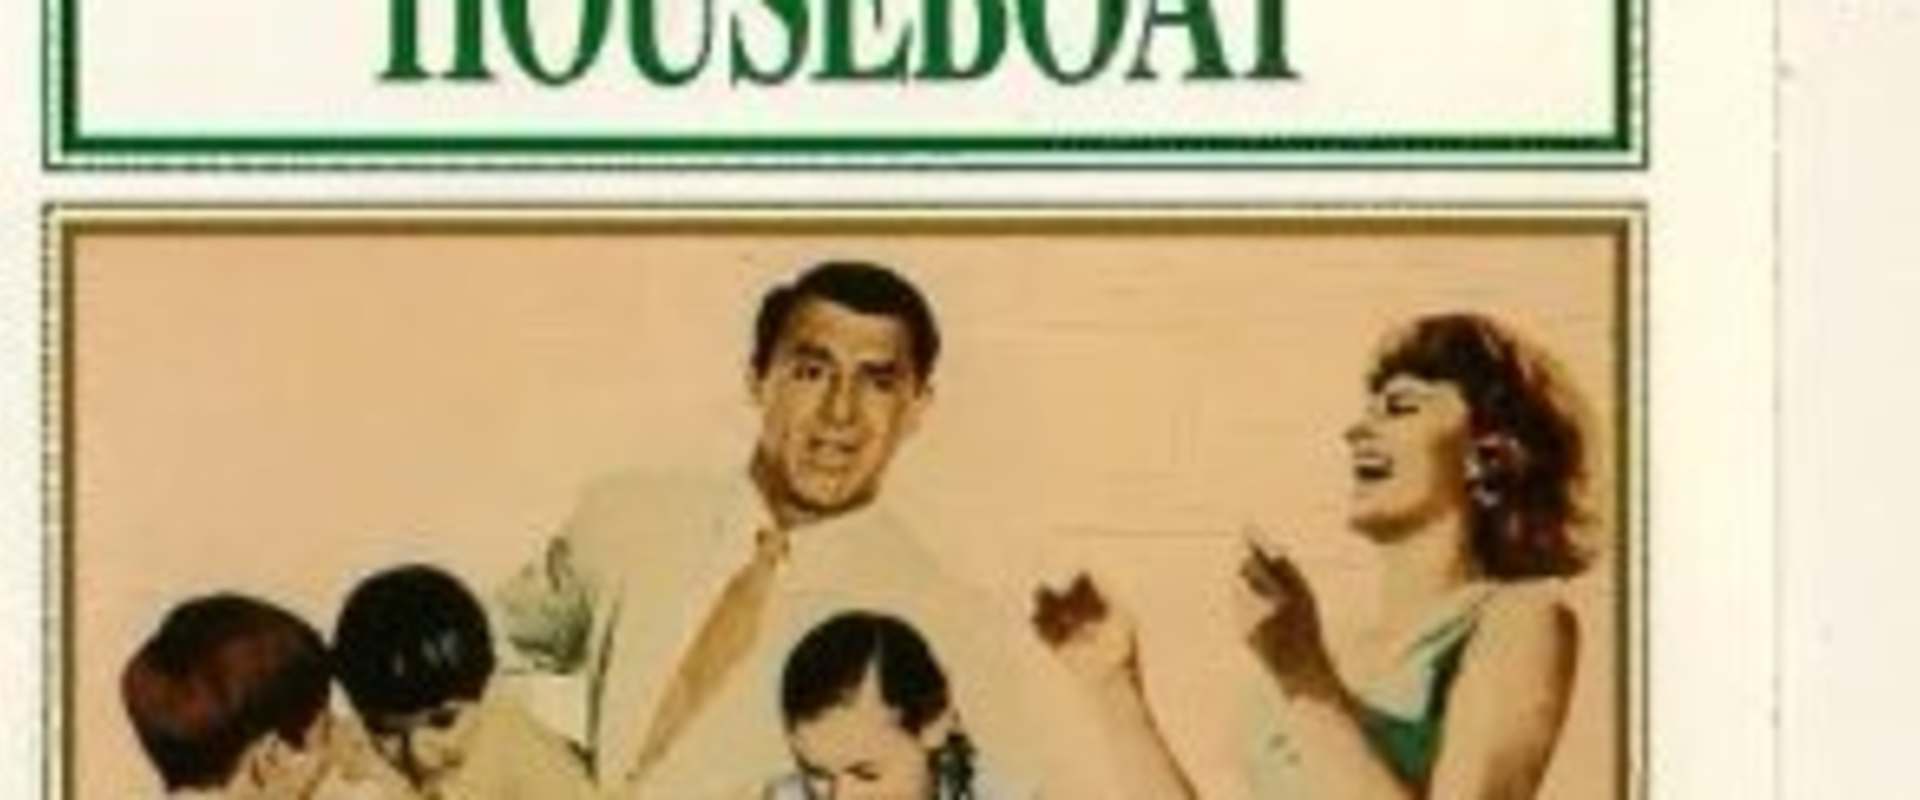 Houseboat background 2